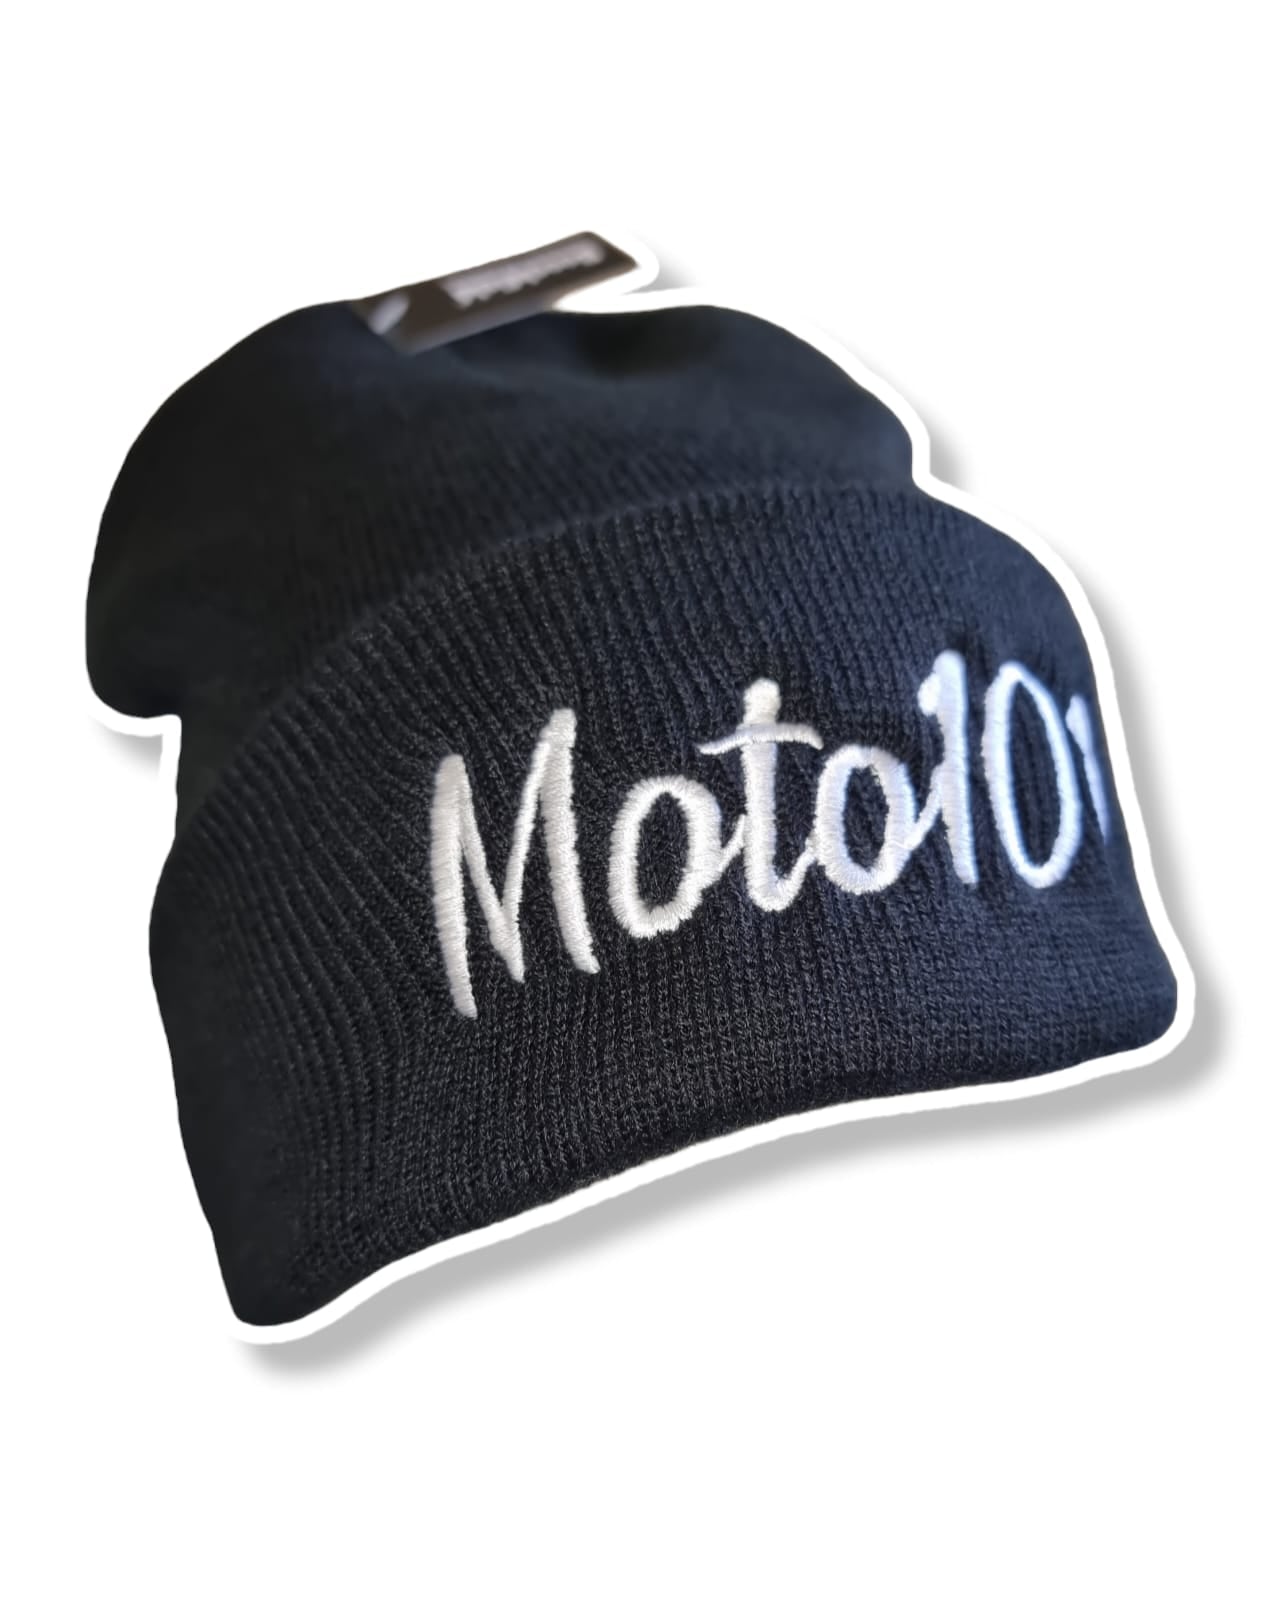 Moto101 Beanie